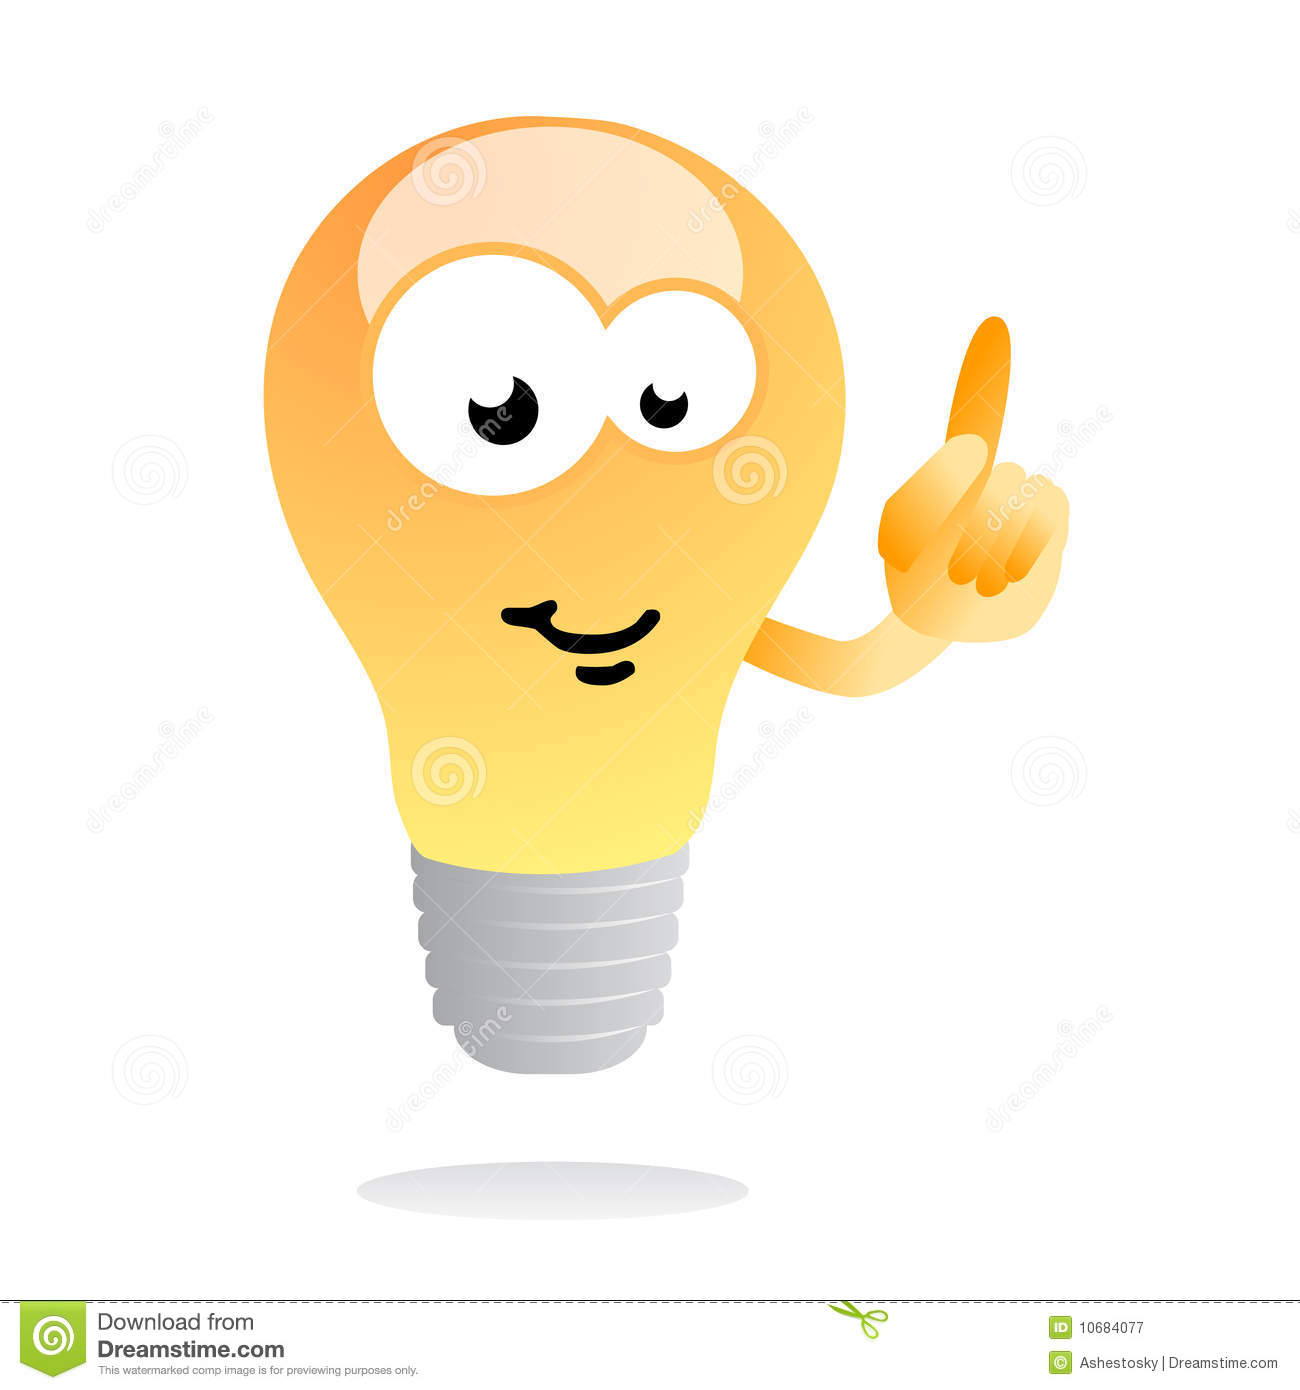 Bright Idea Light Bulb Mascot Royalty Free Stock Photography   Image